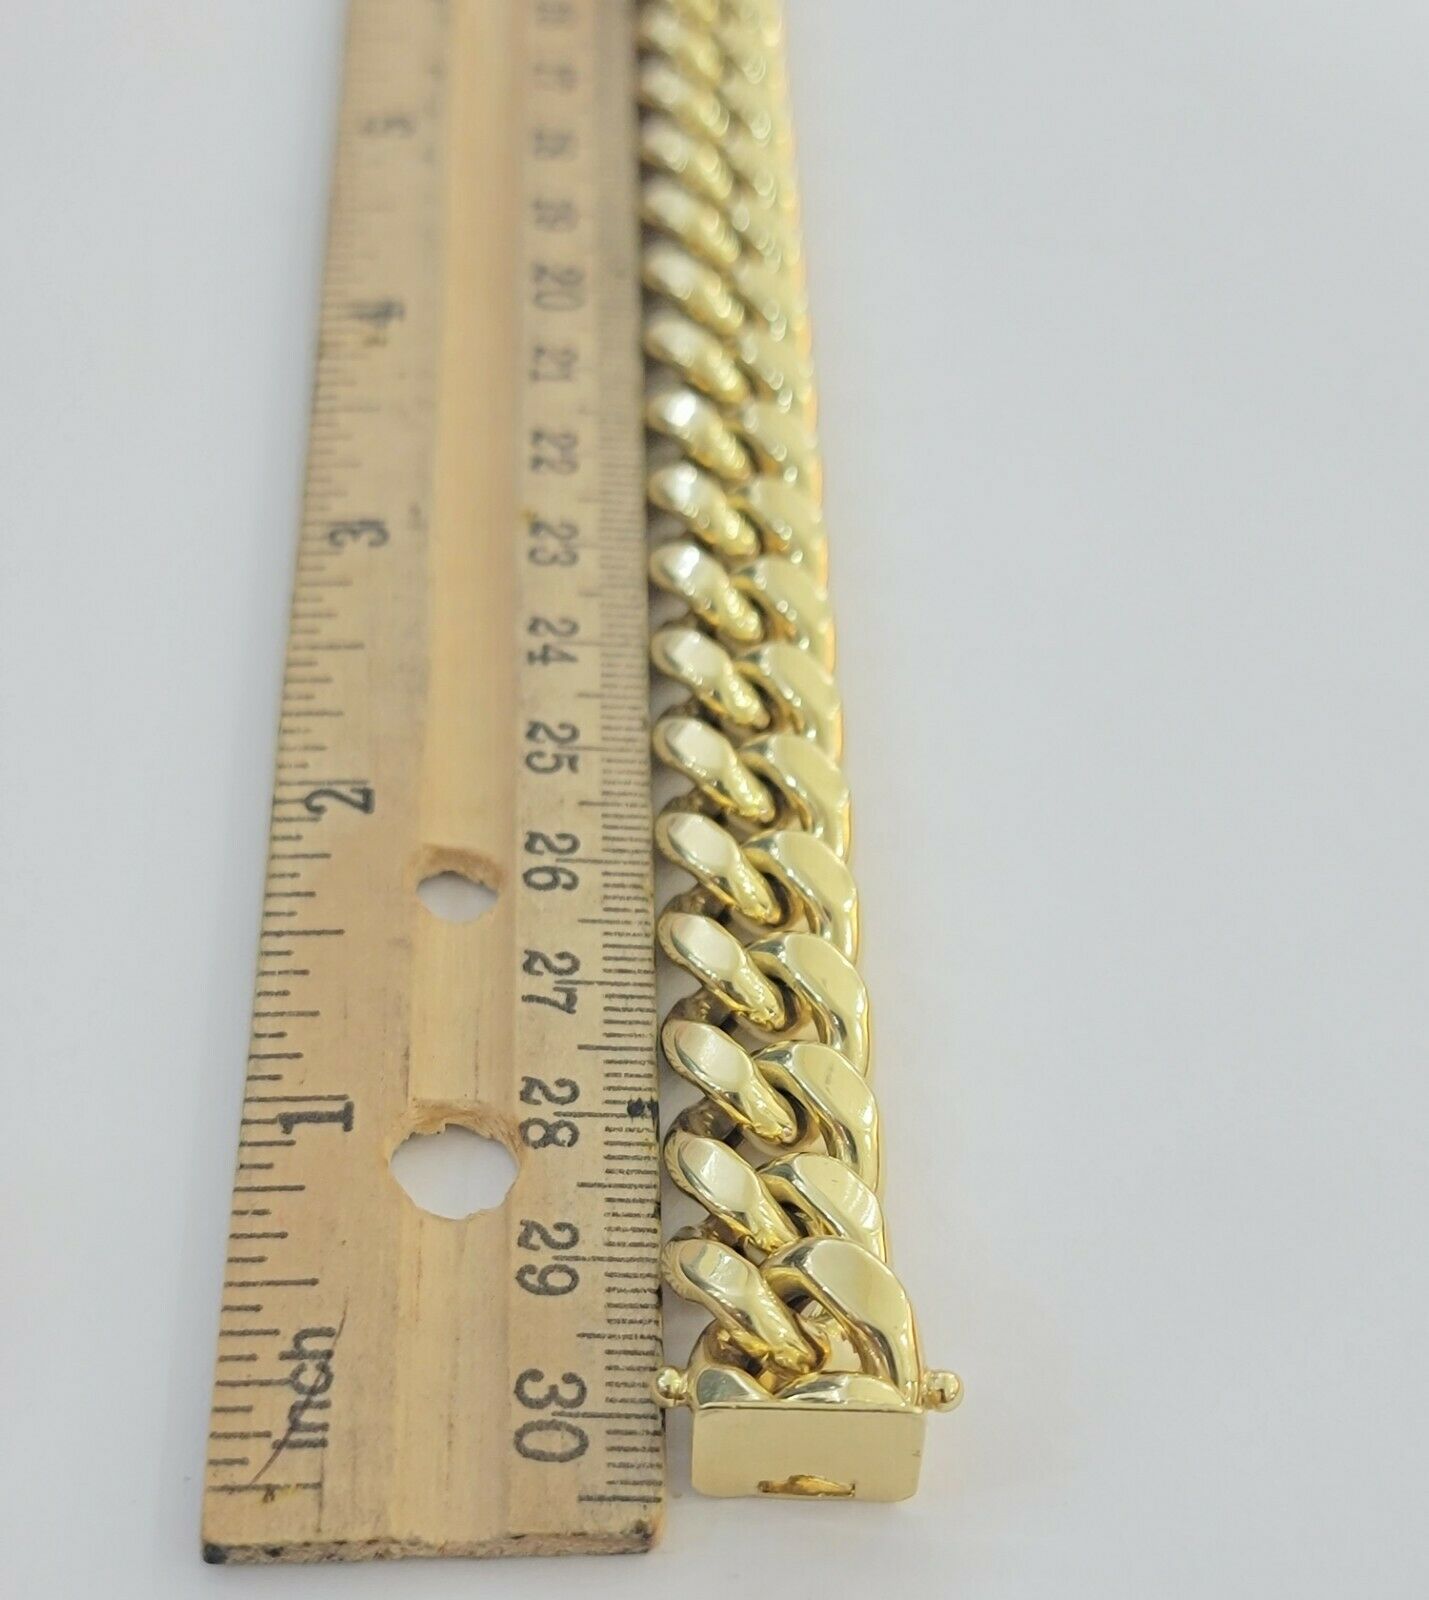 REAL 10k Gold Chain Bracelet Set Miami Cuban Link Mens 13mm 30